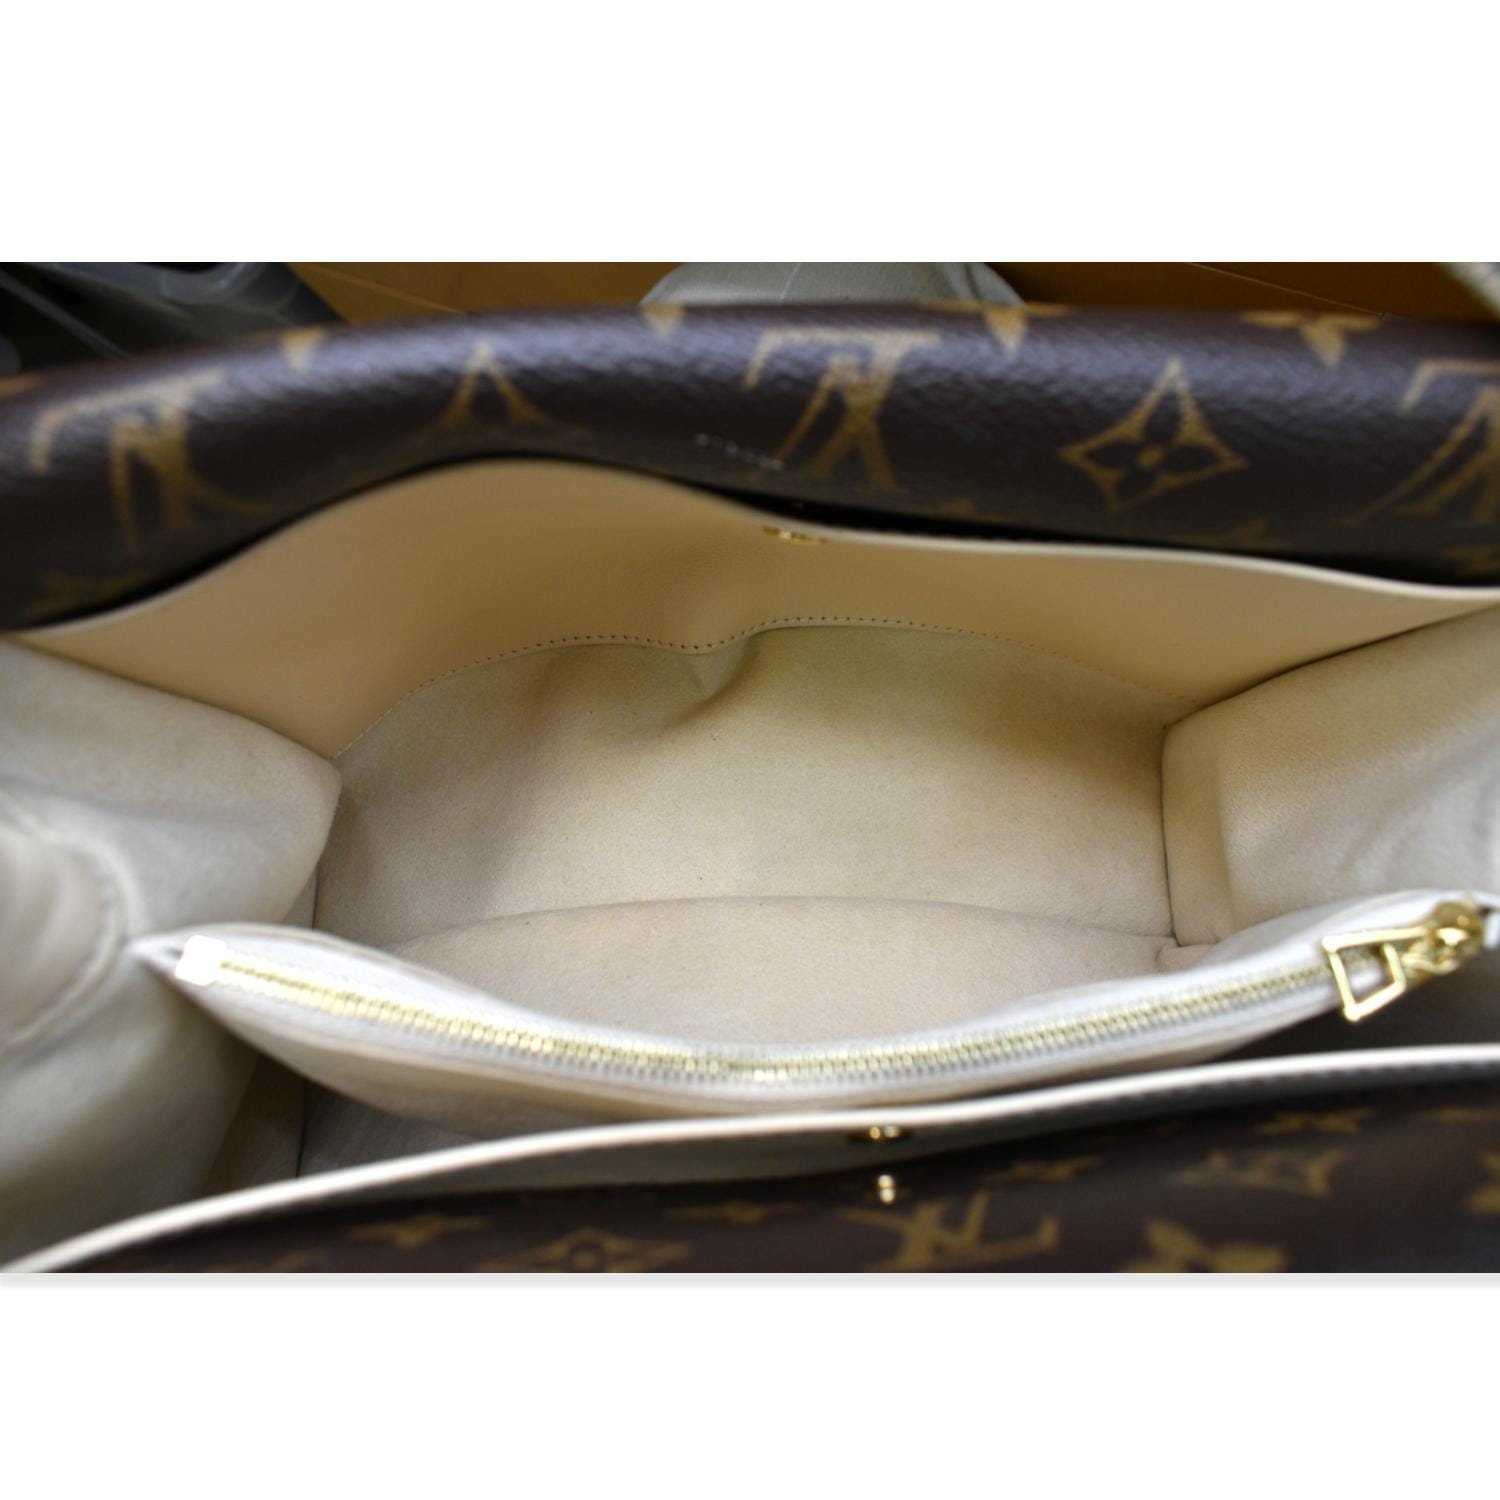 Louis Vuitton Monogram Double V Bag